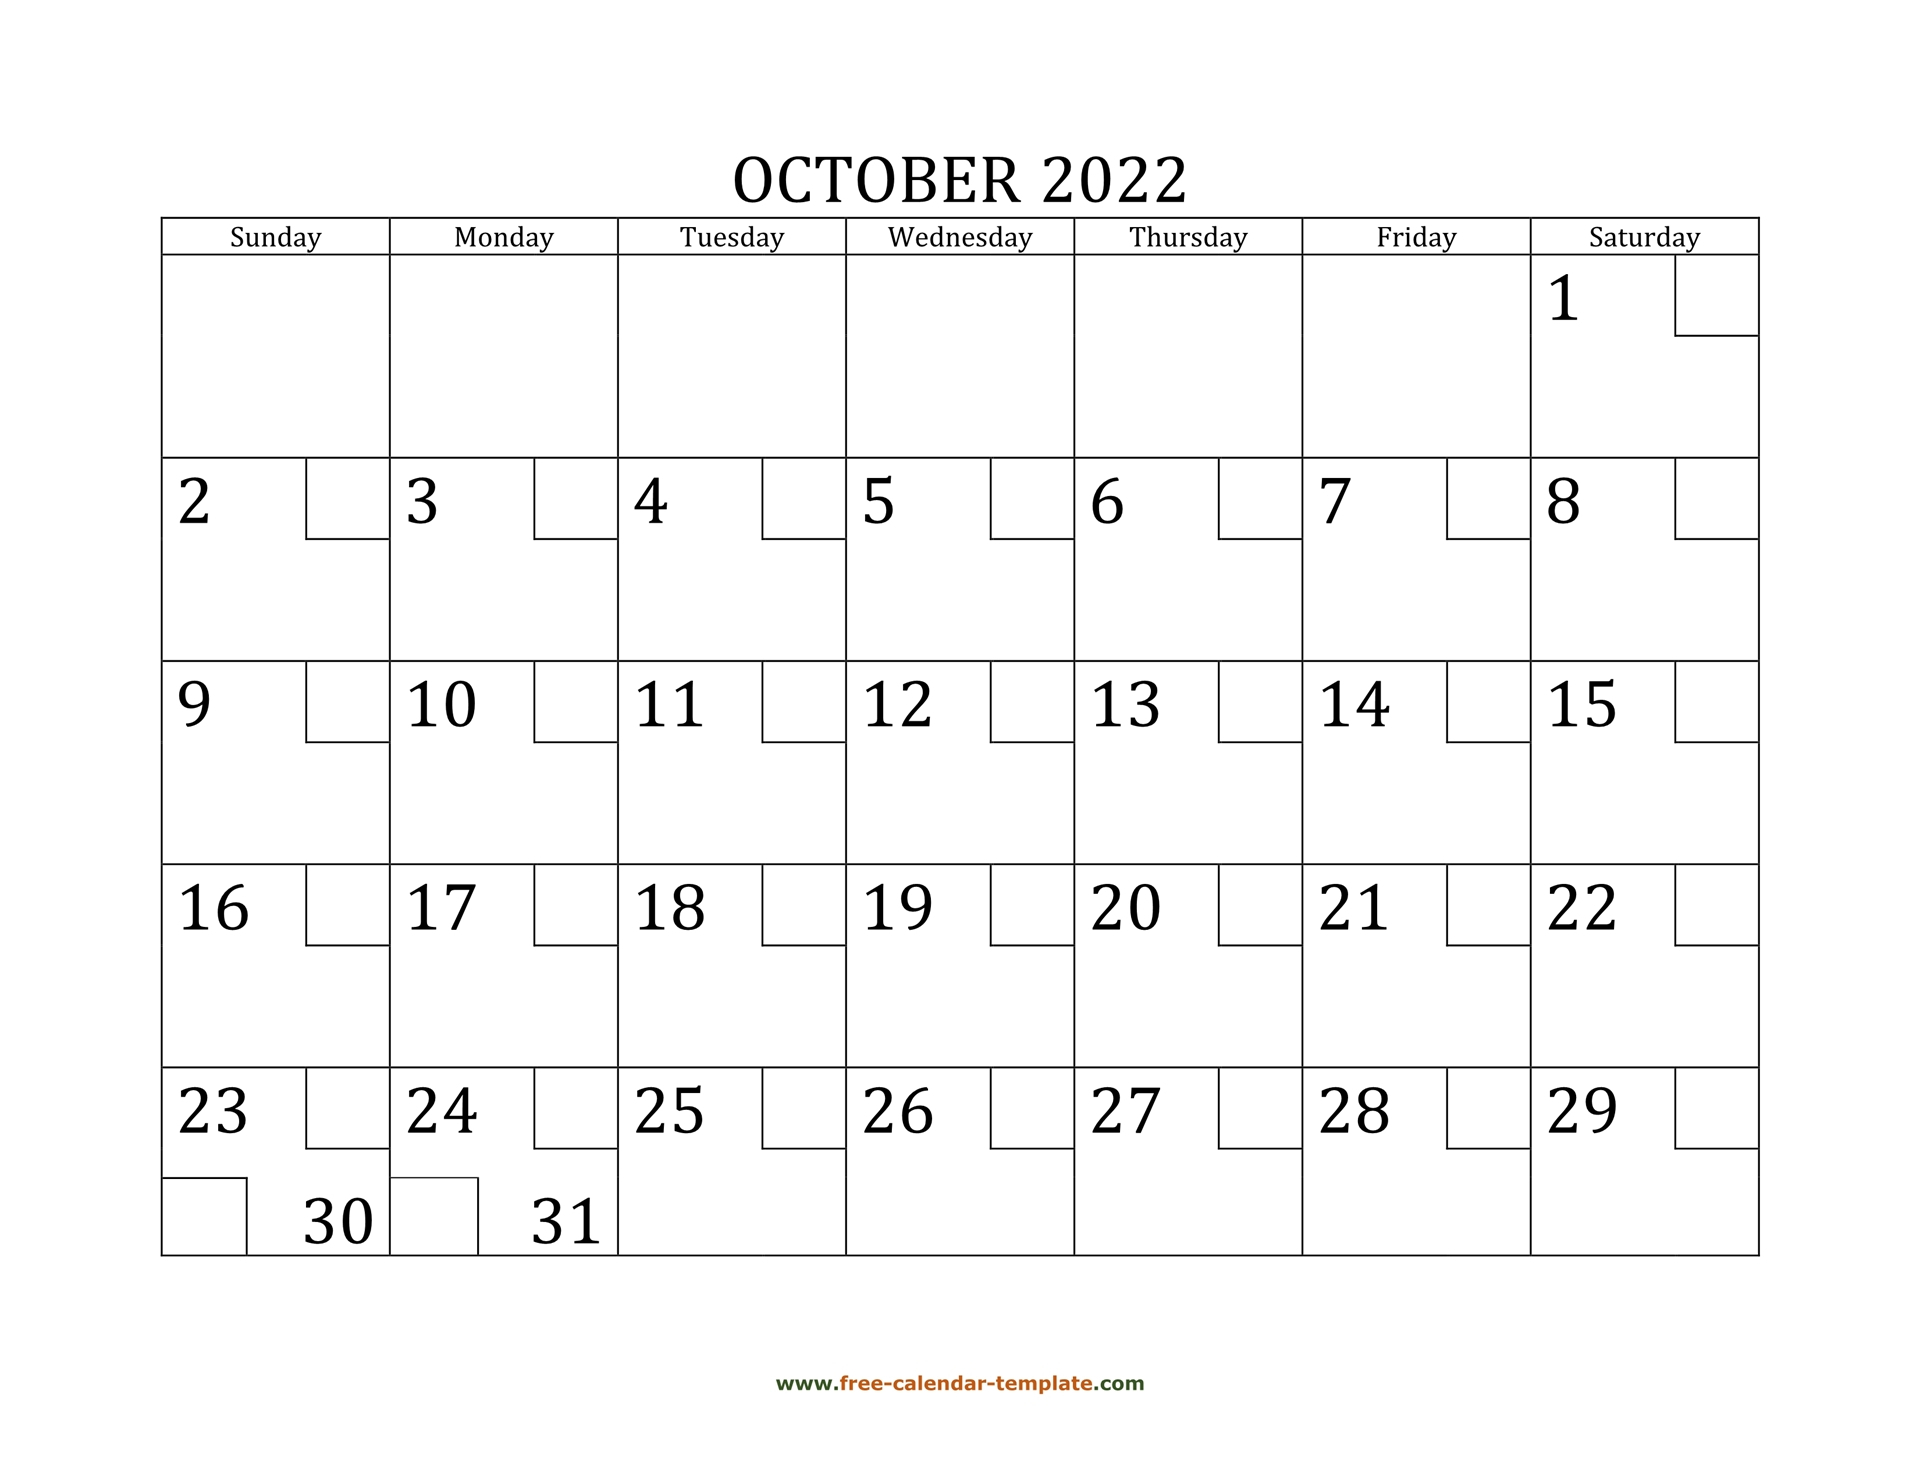 Pick 2022 October Calendar With Holidays